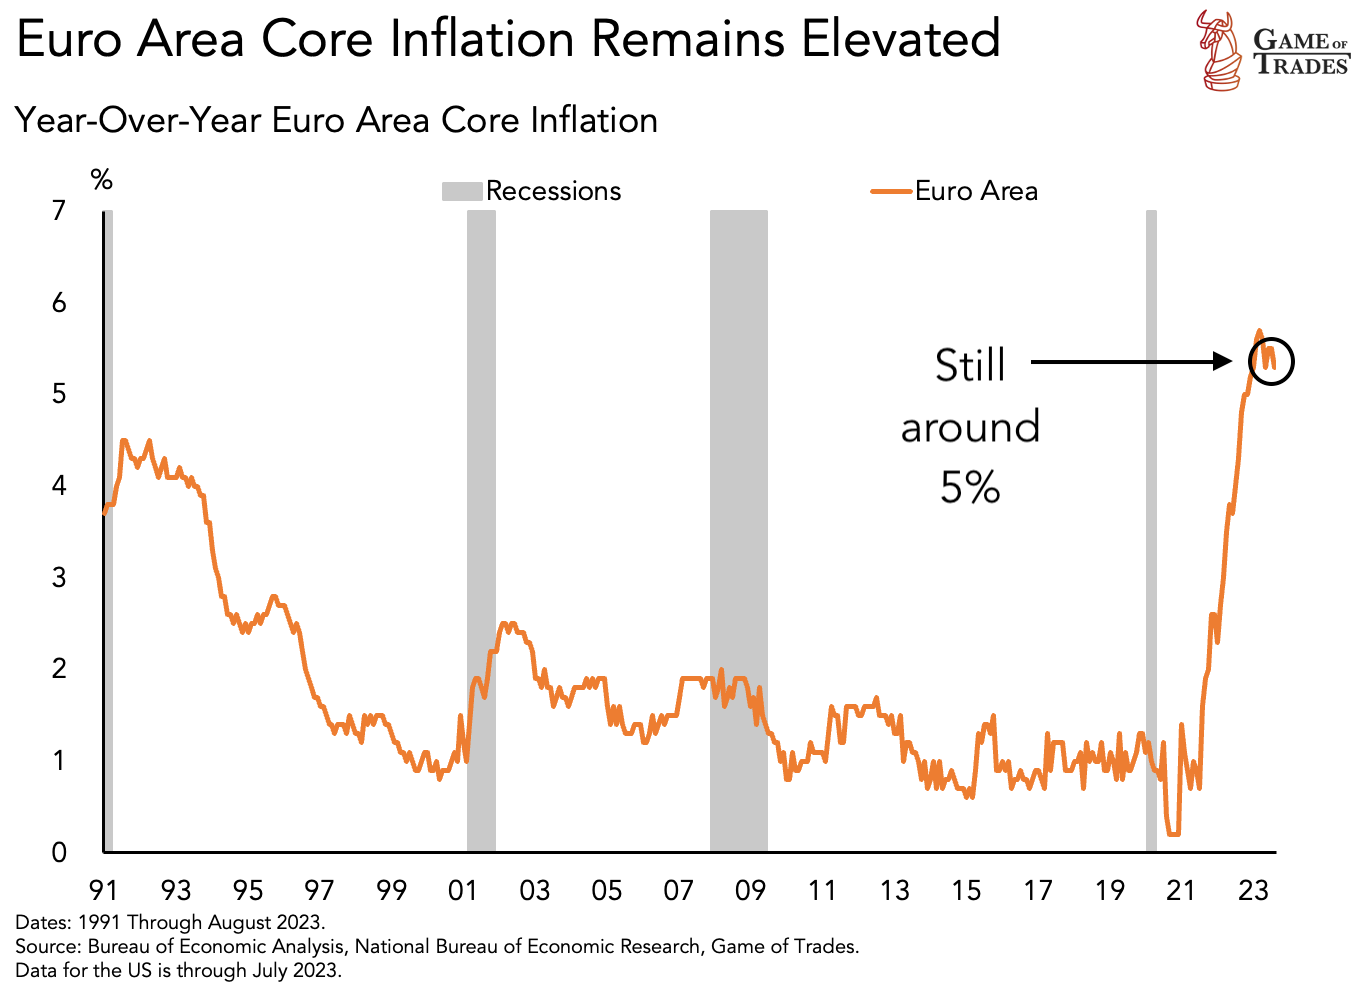 Euro Area Core Inflation
